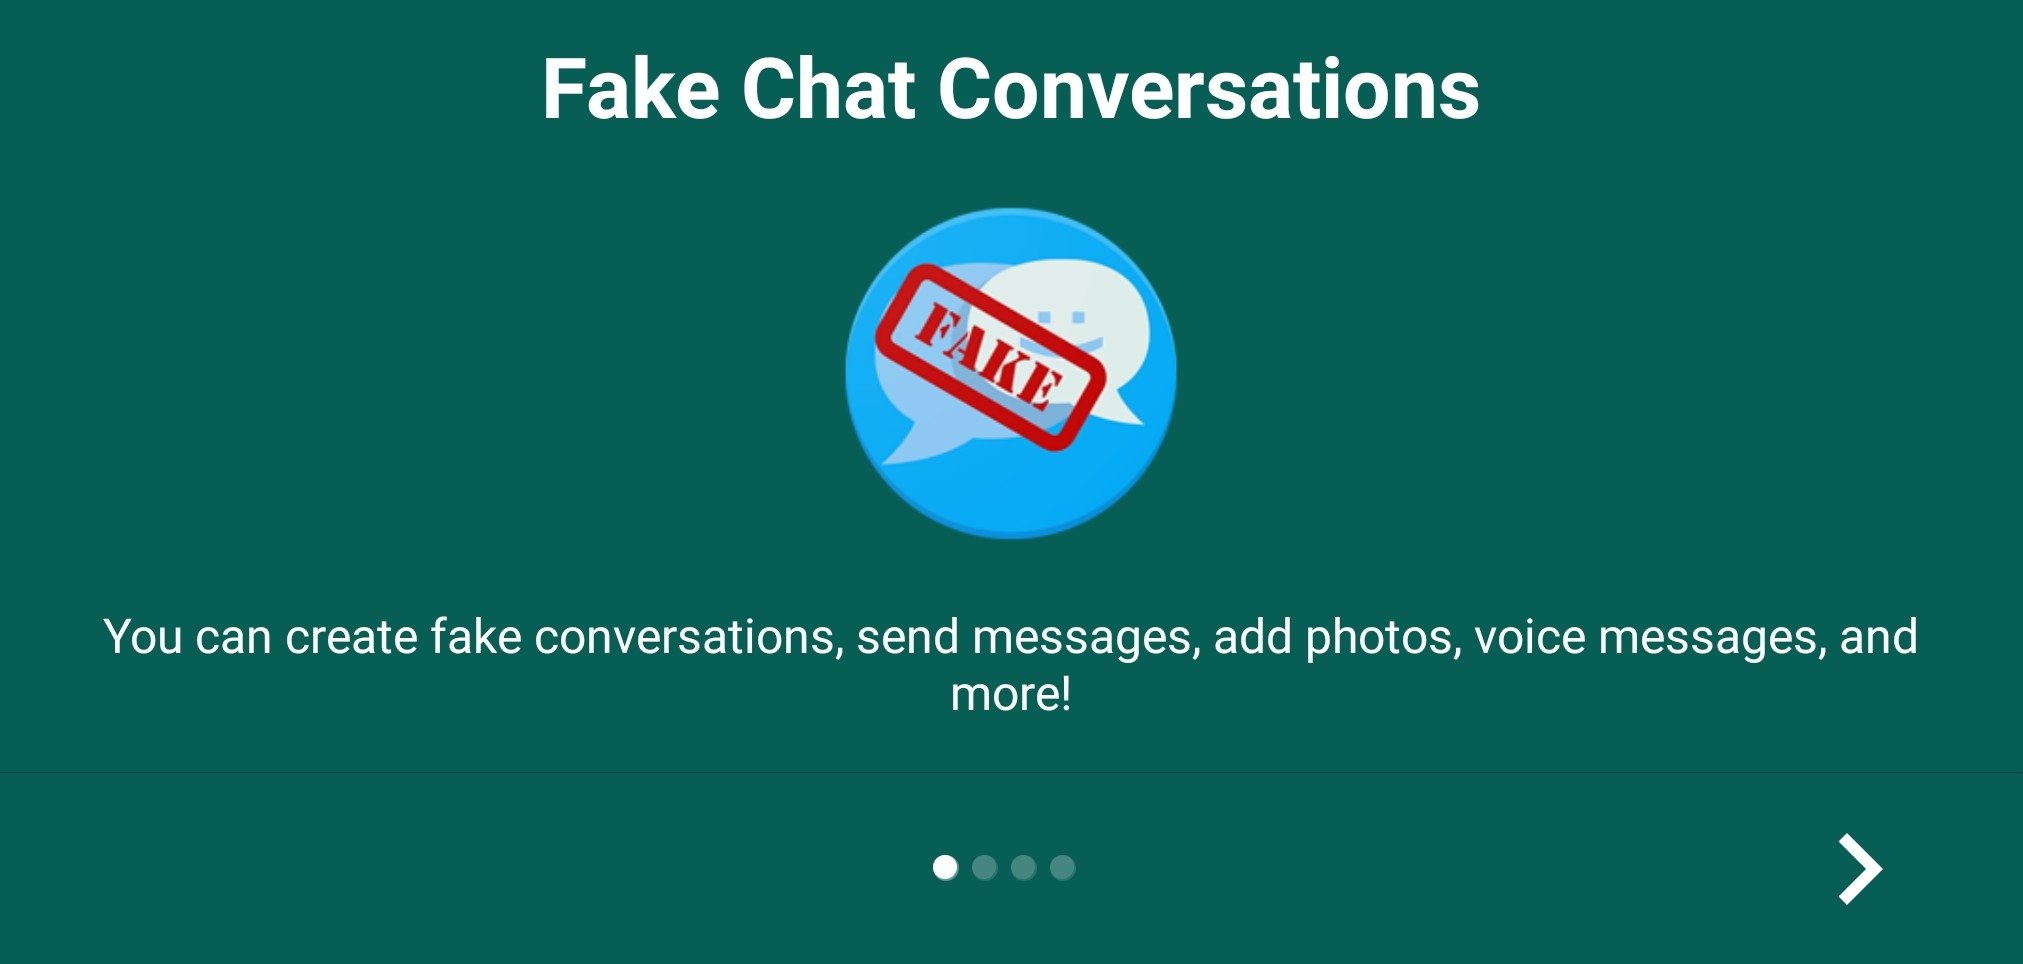 Conversations download chat fake Fake Facebook